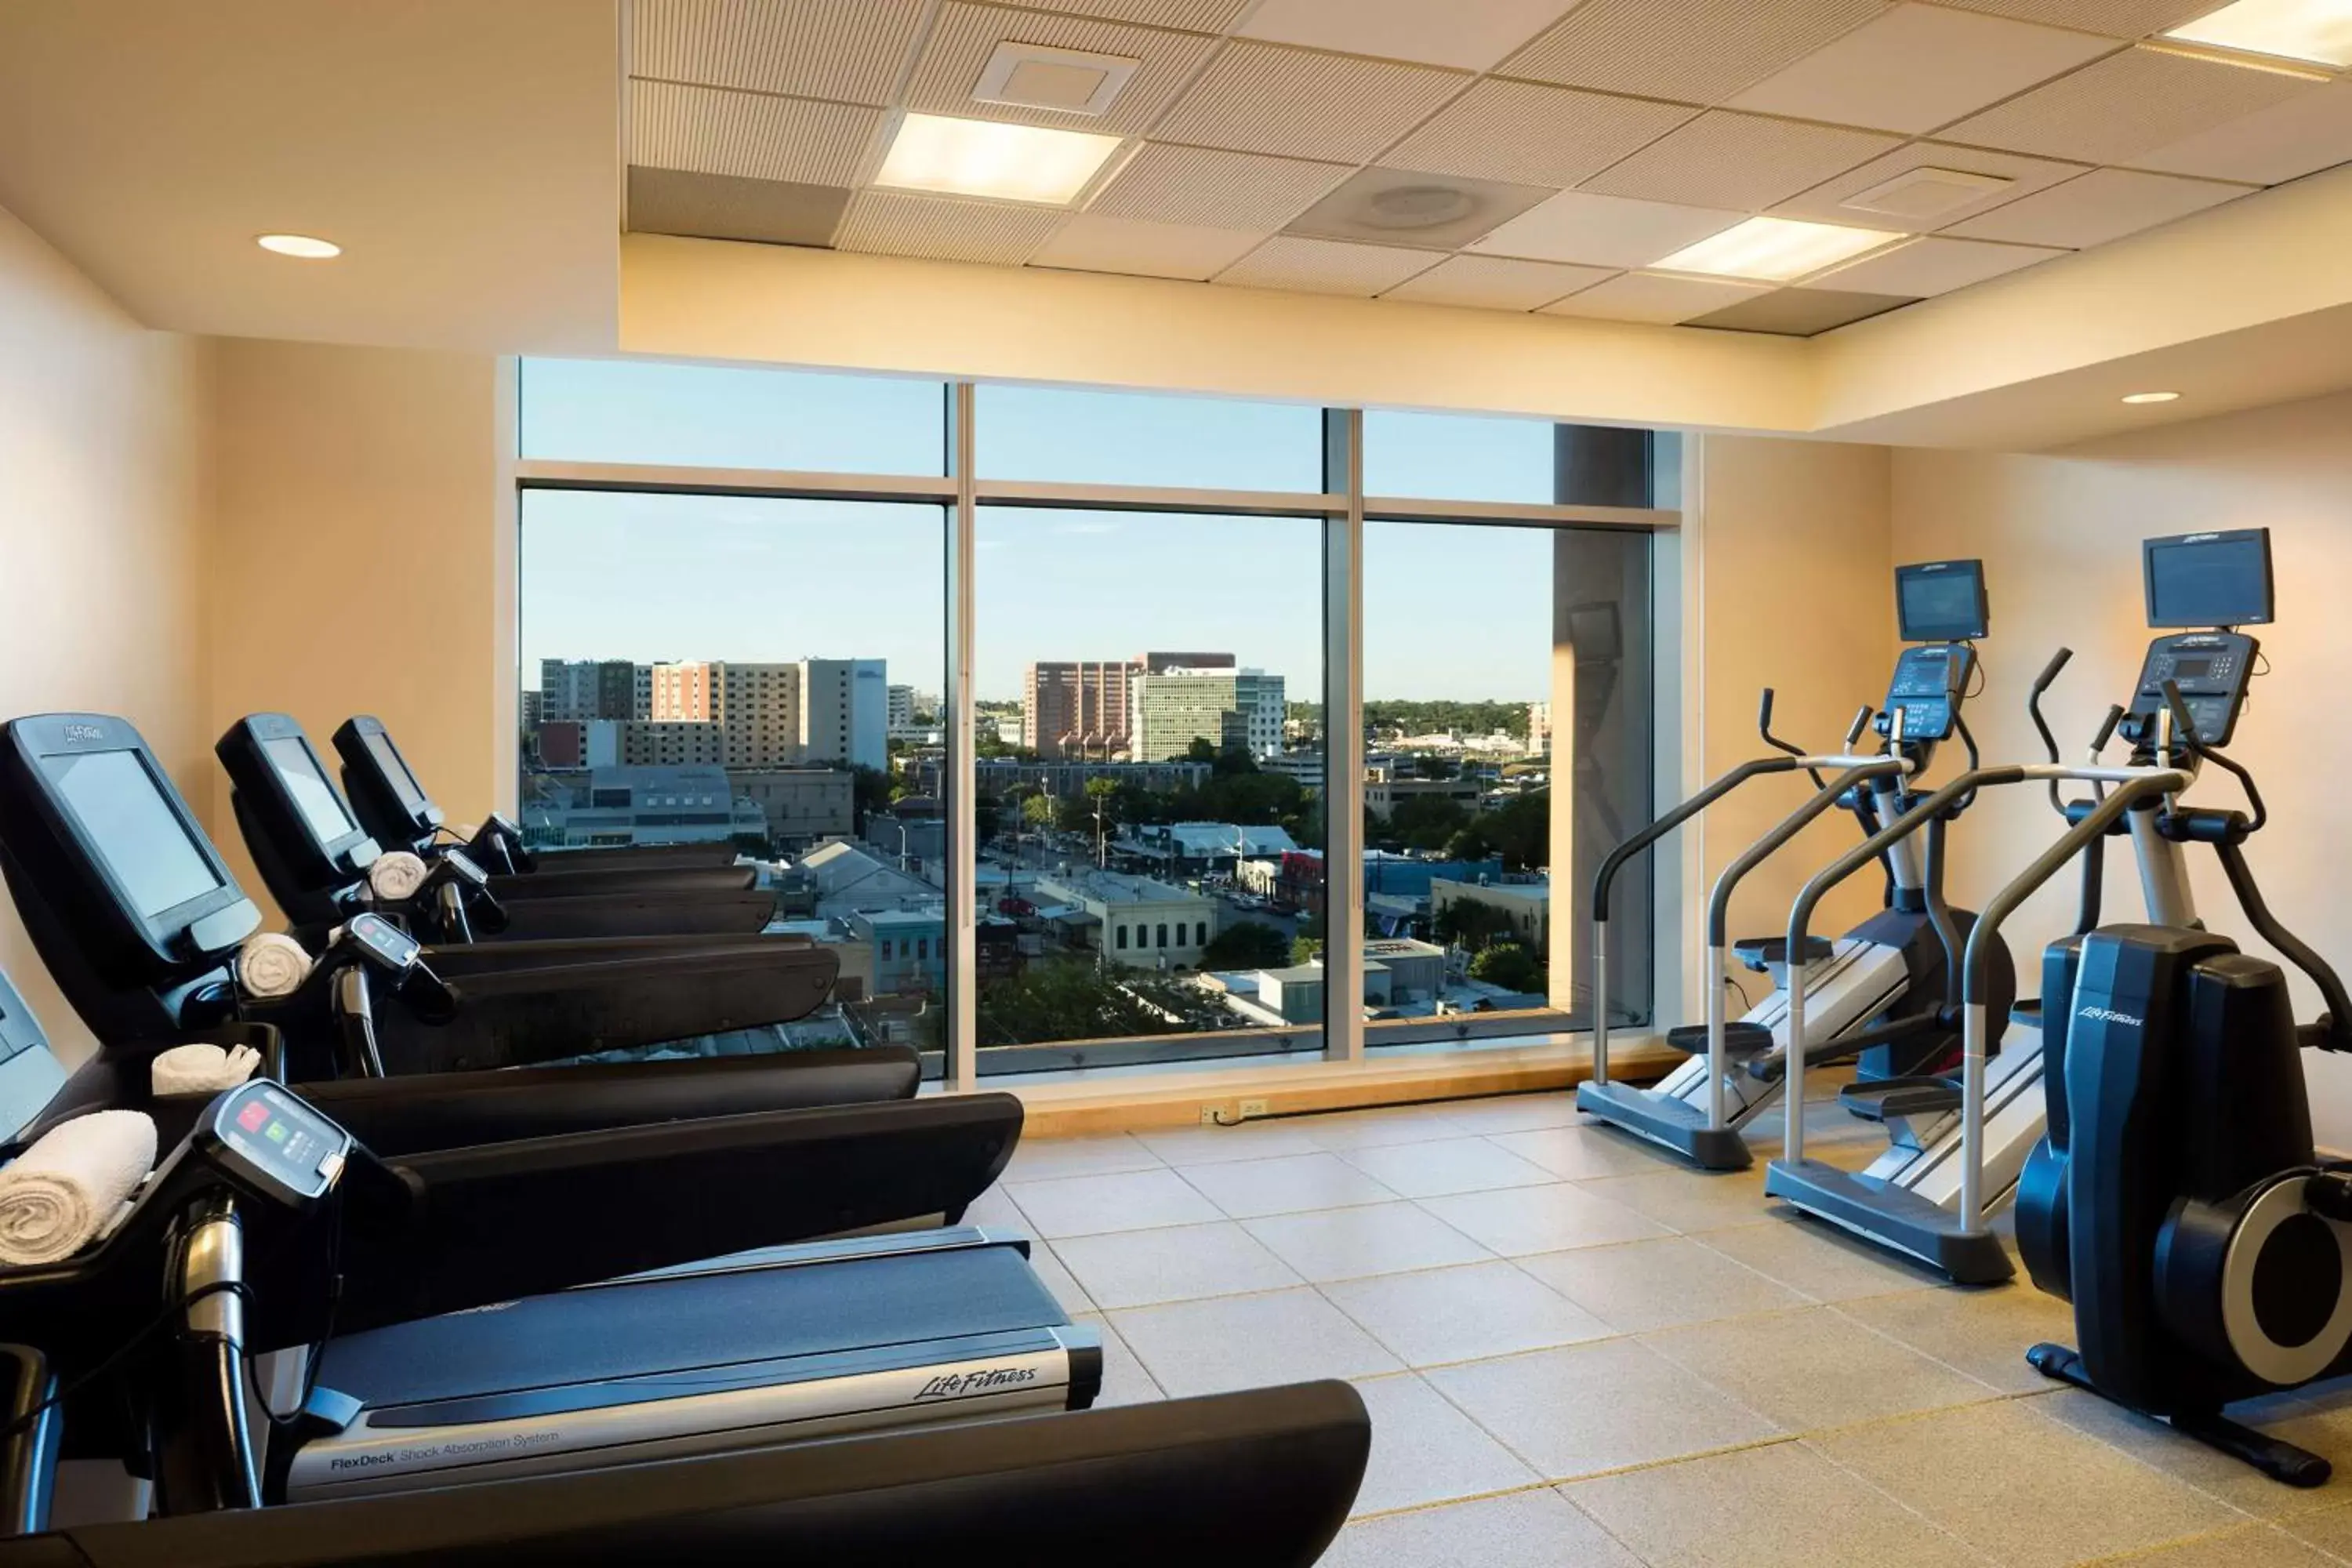 Fitness centre/facilities, Fitness Center/Facilities in Hilton Austin